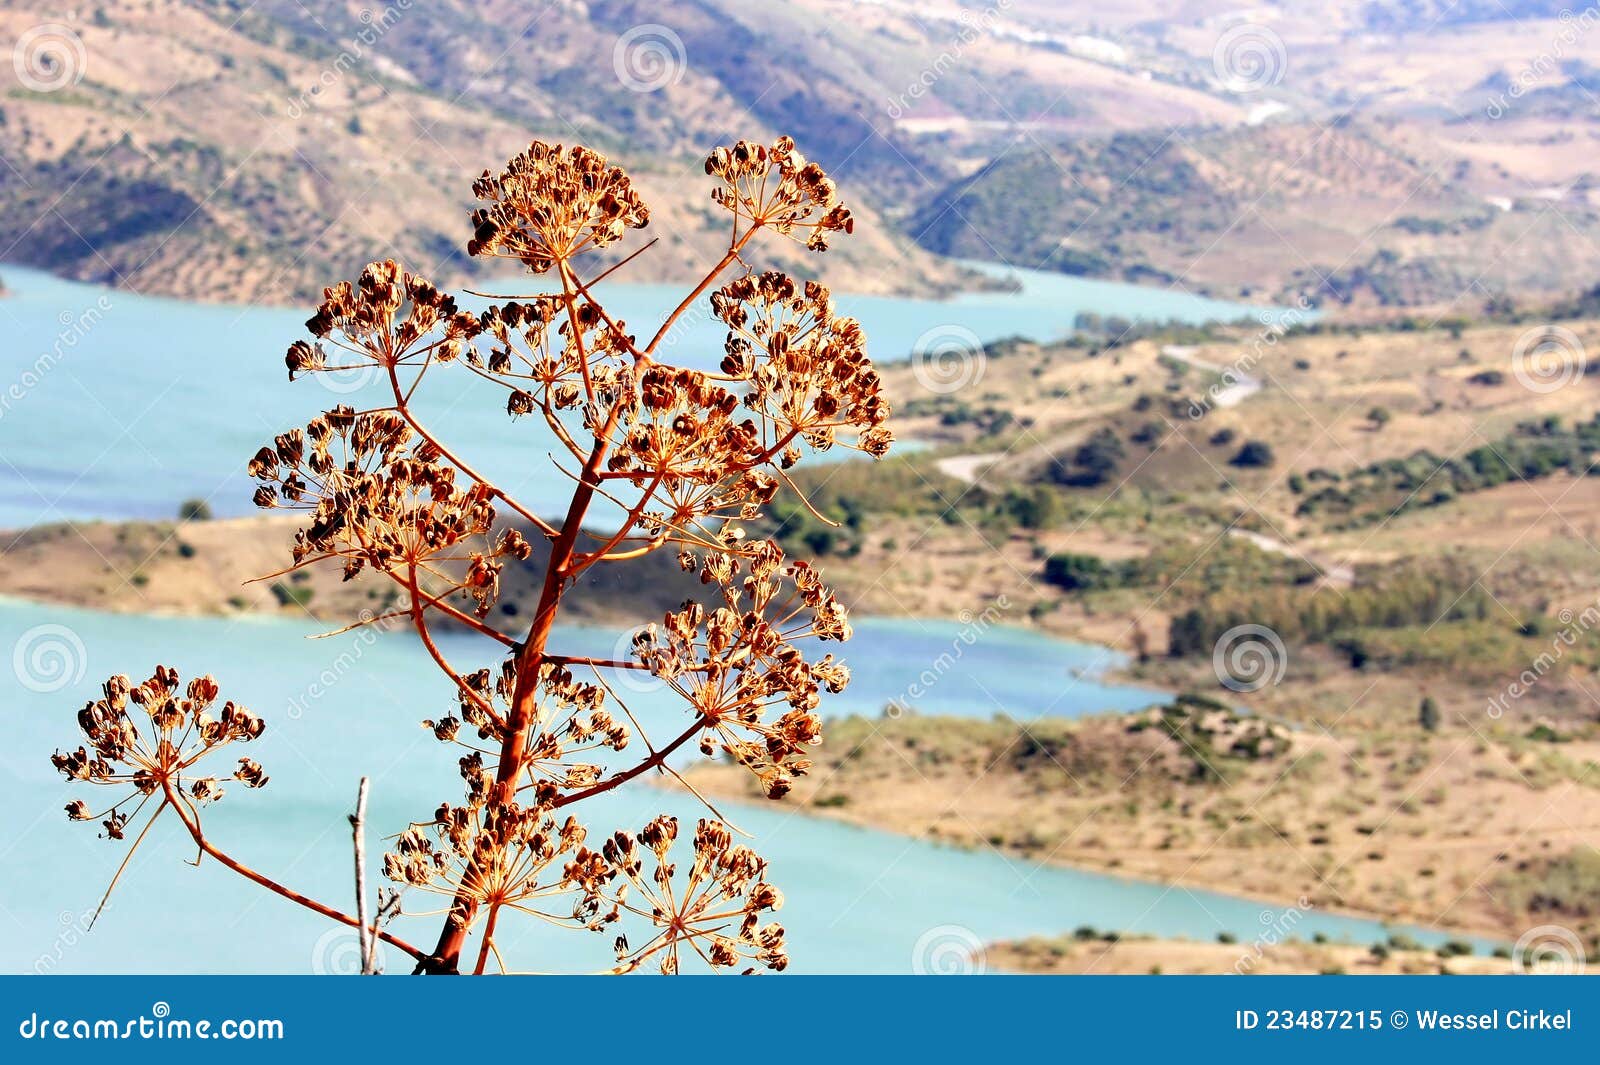 lake and agave near zahara de la sierra, andalusia